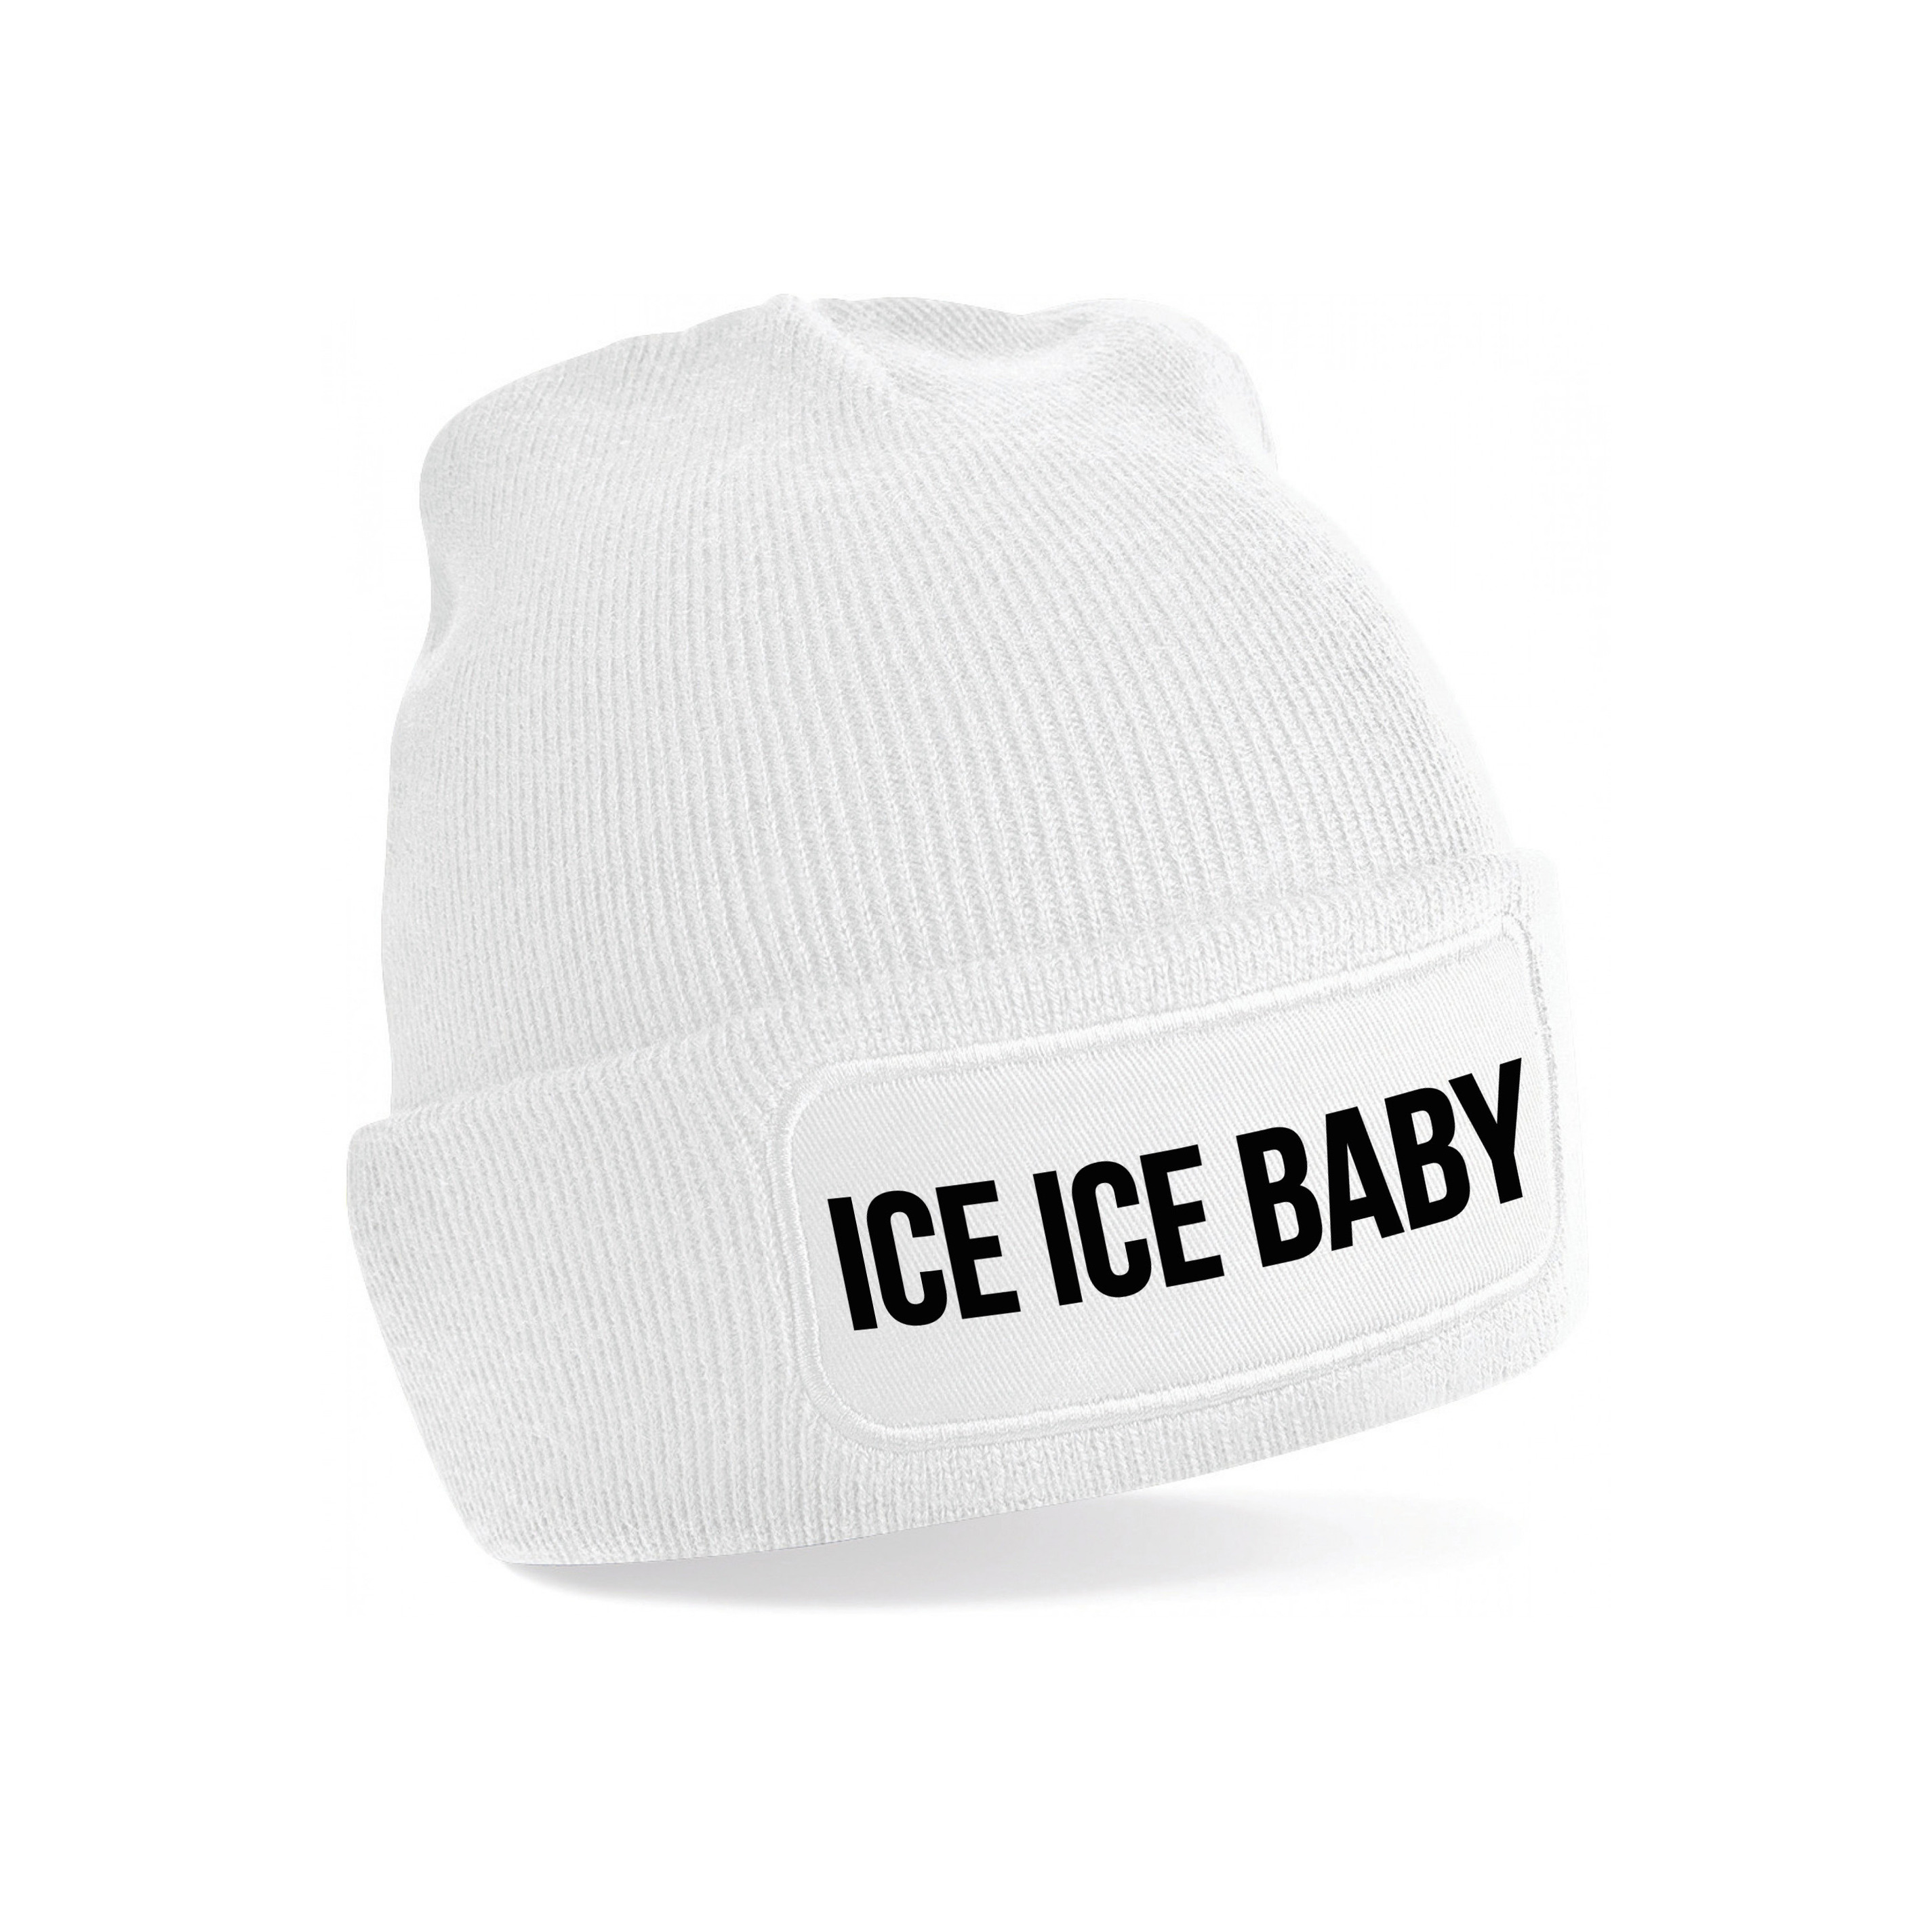 Ice ice baby muts unisex one size wit